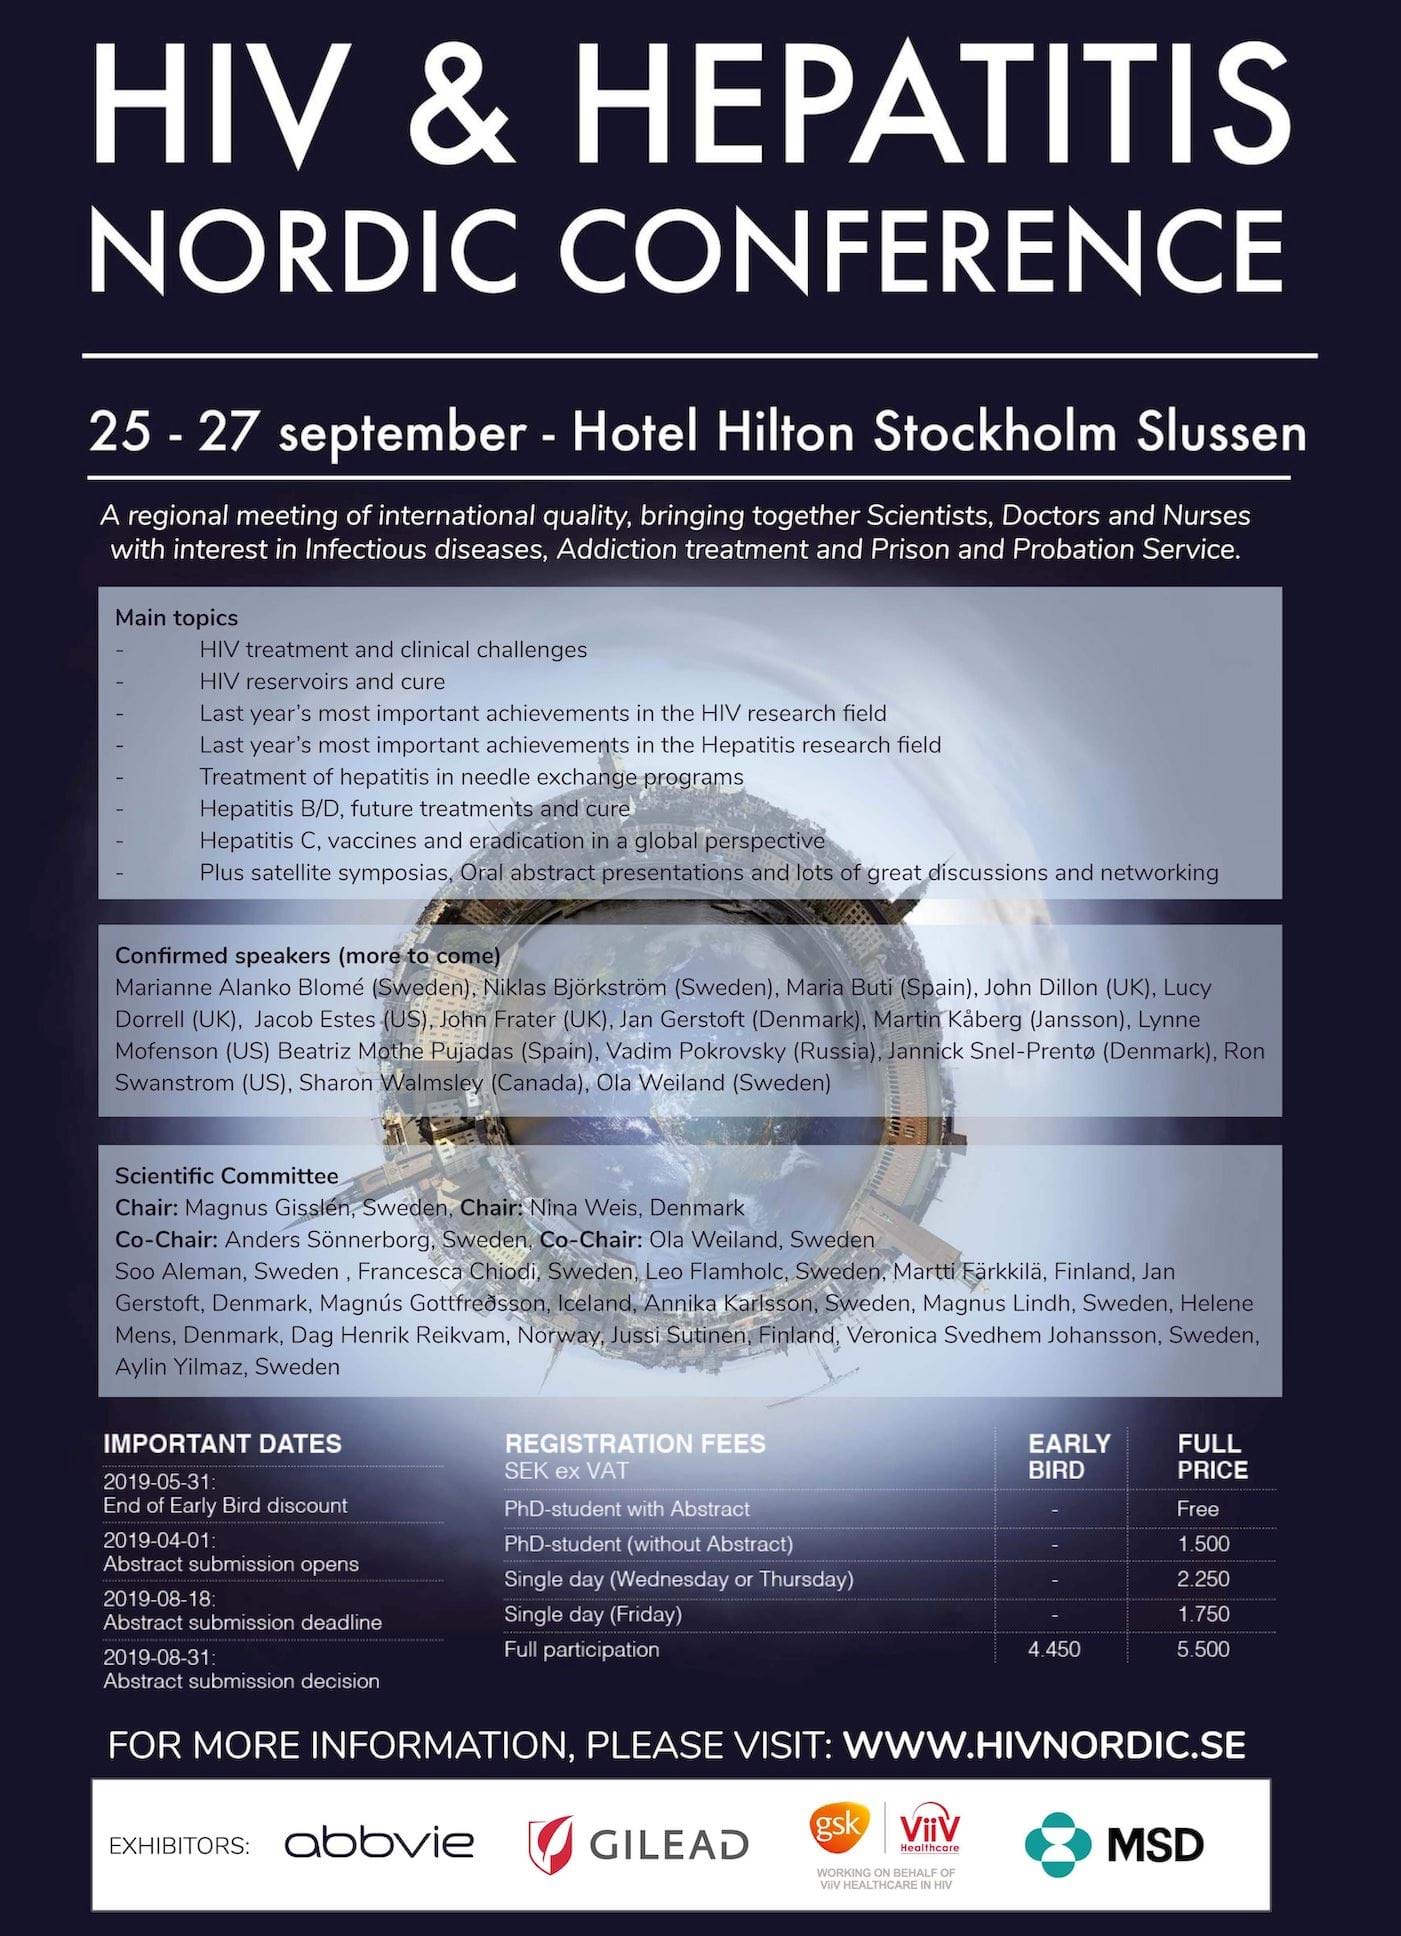 HIV&Hepatitis Nordic Conference plakat